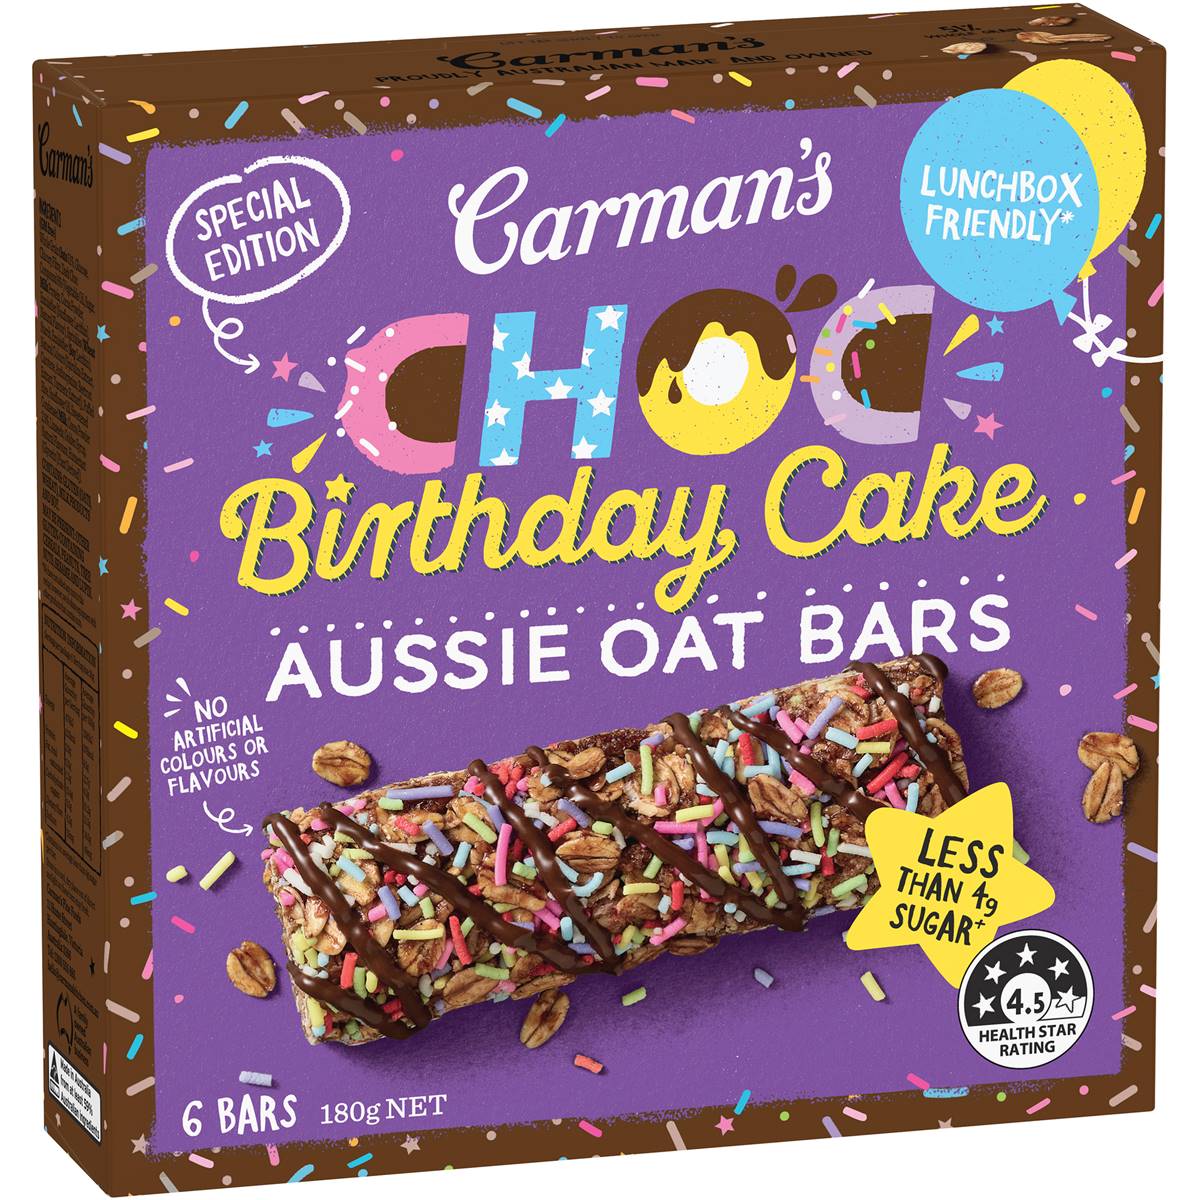 Calories in Carman's Aussie Oat Muesli Bars Choc Birthday Cake